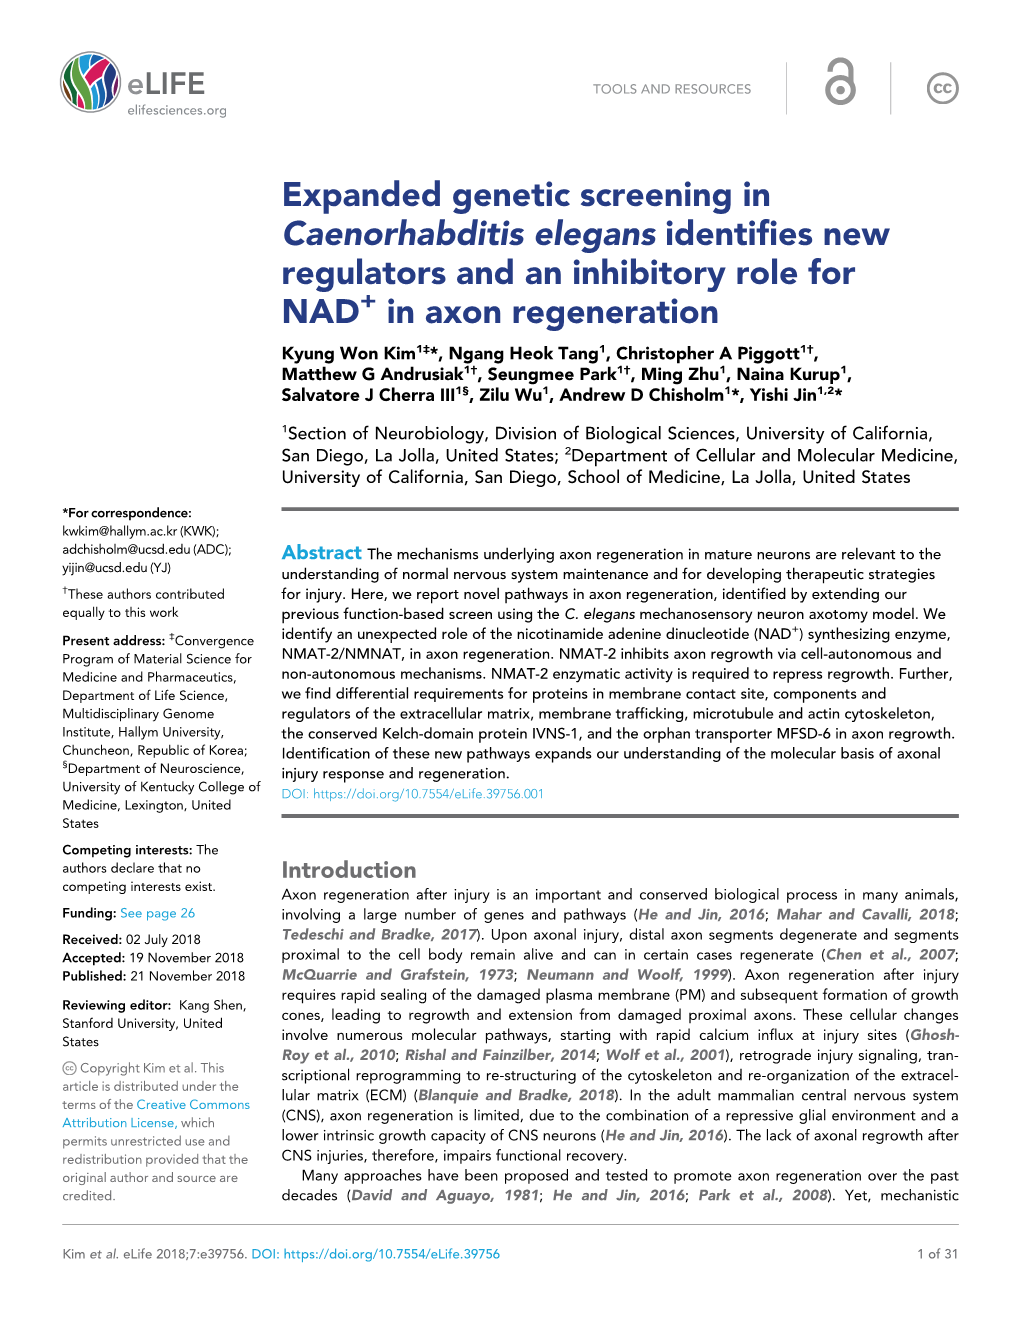 Expanded Genetic Screening in Caenorhabditis Elegans Identifies